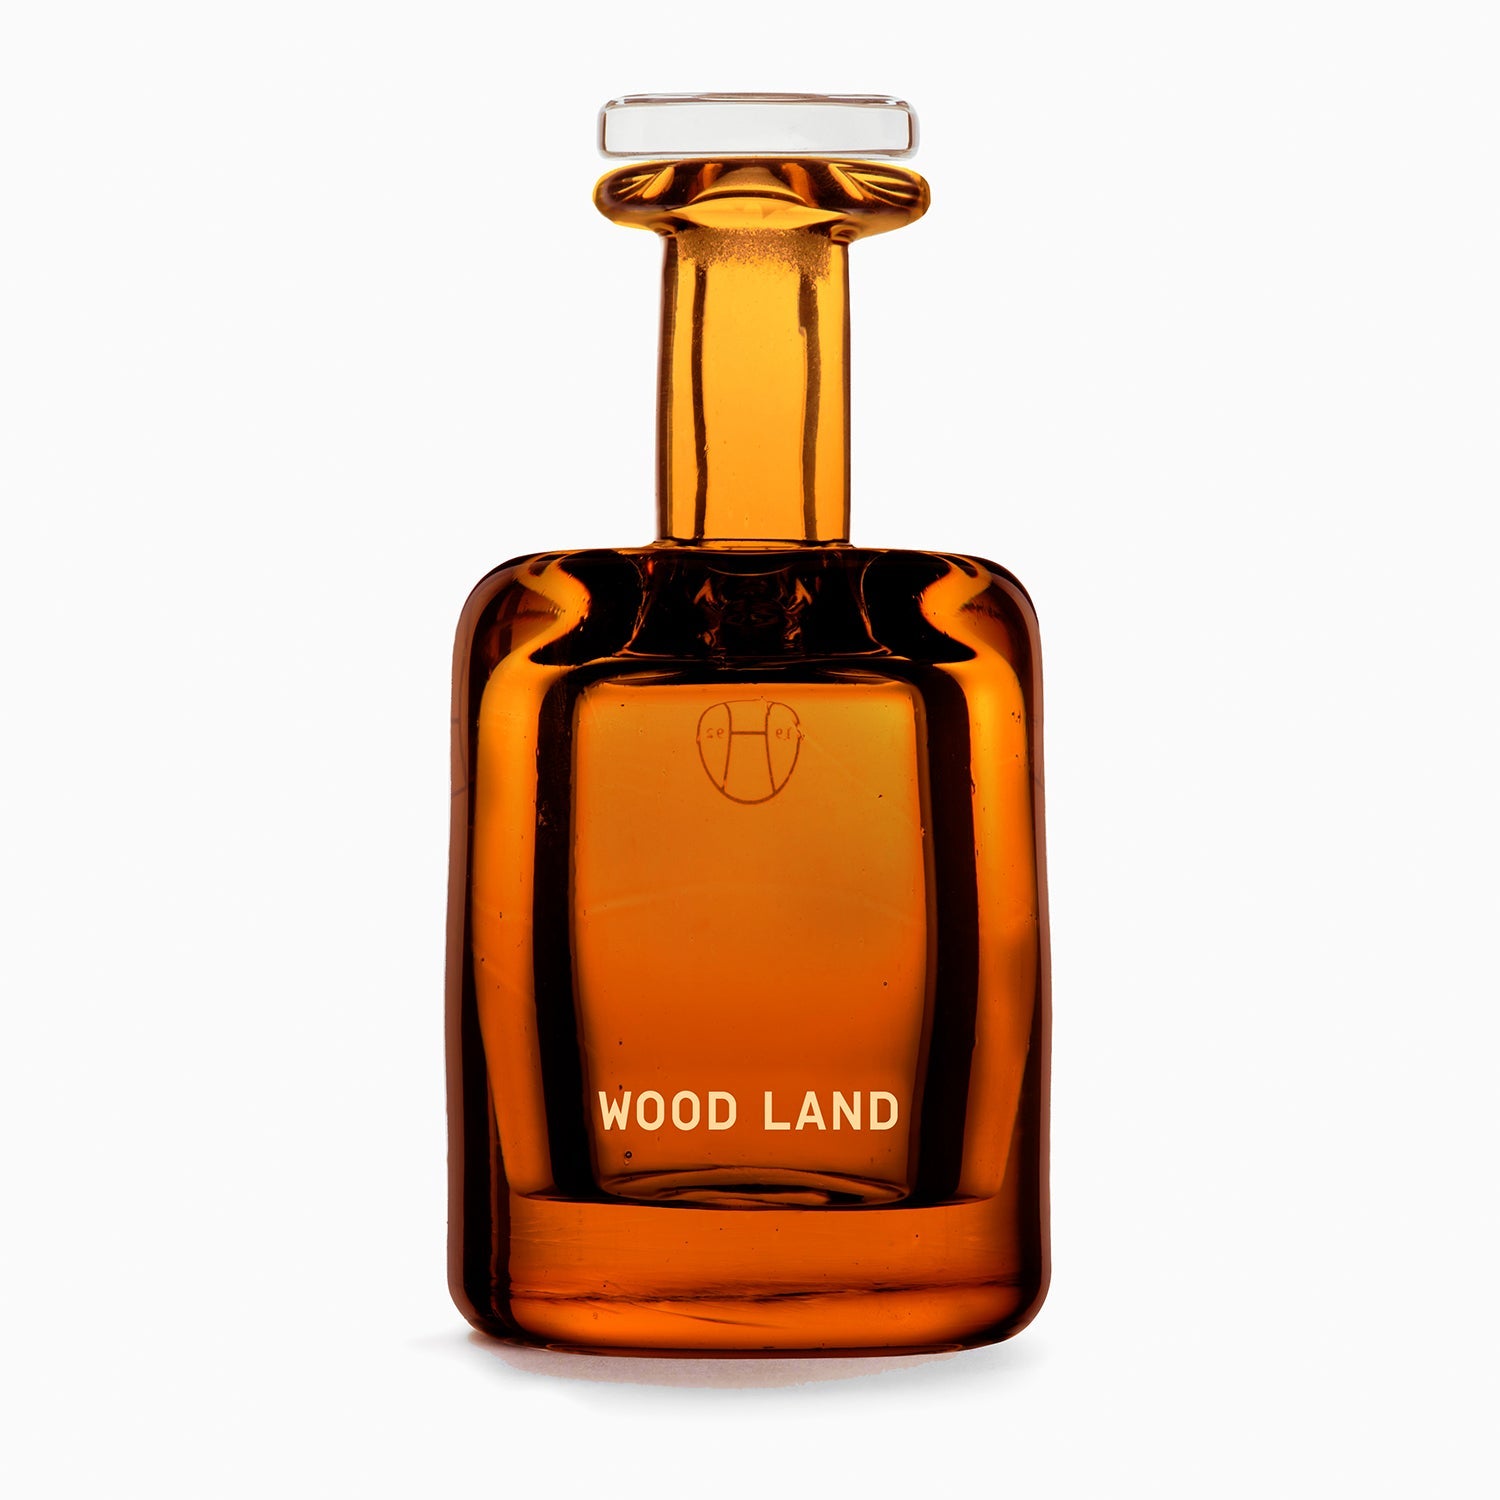 Wood Land – Perfumer H